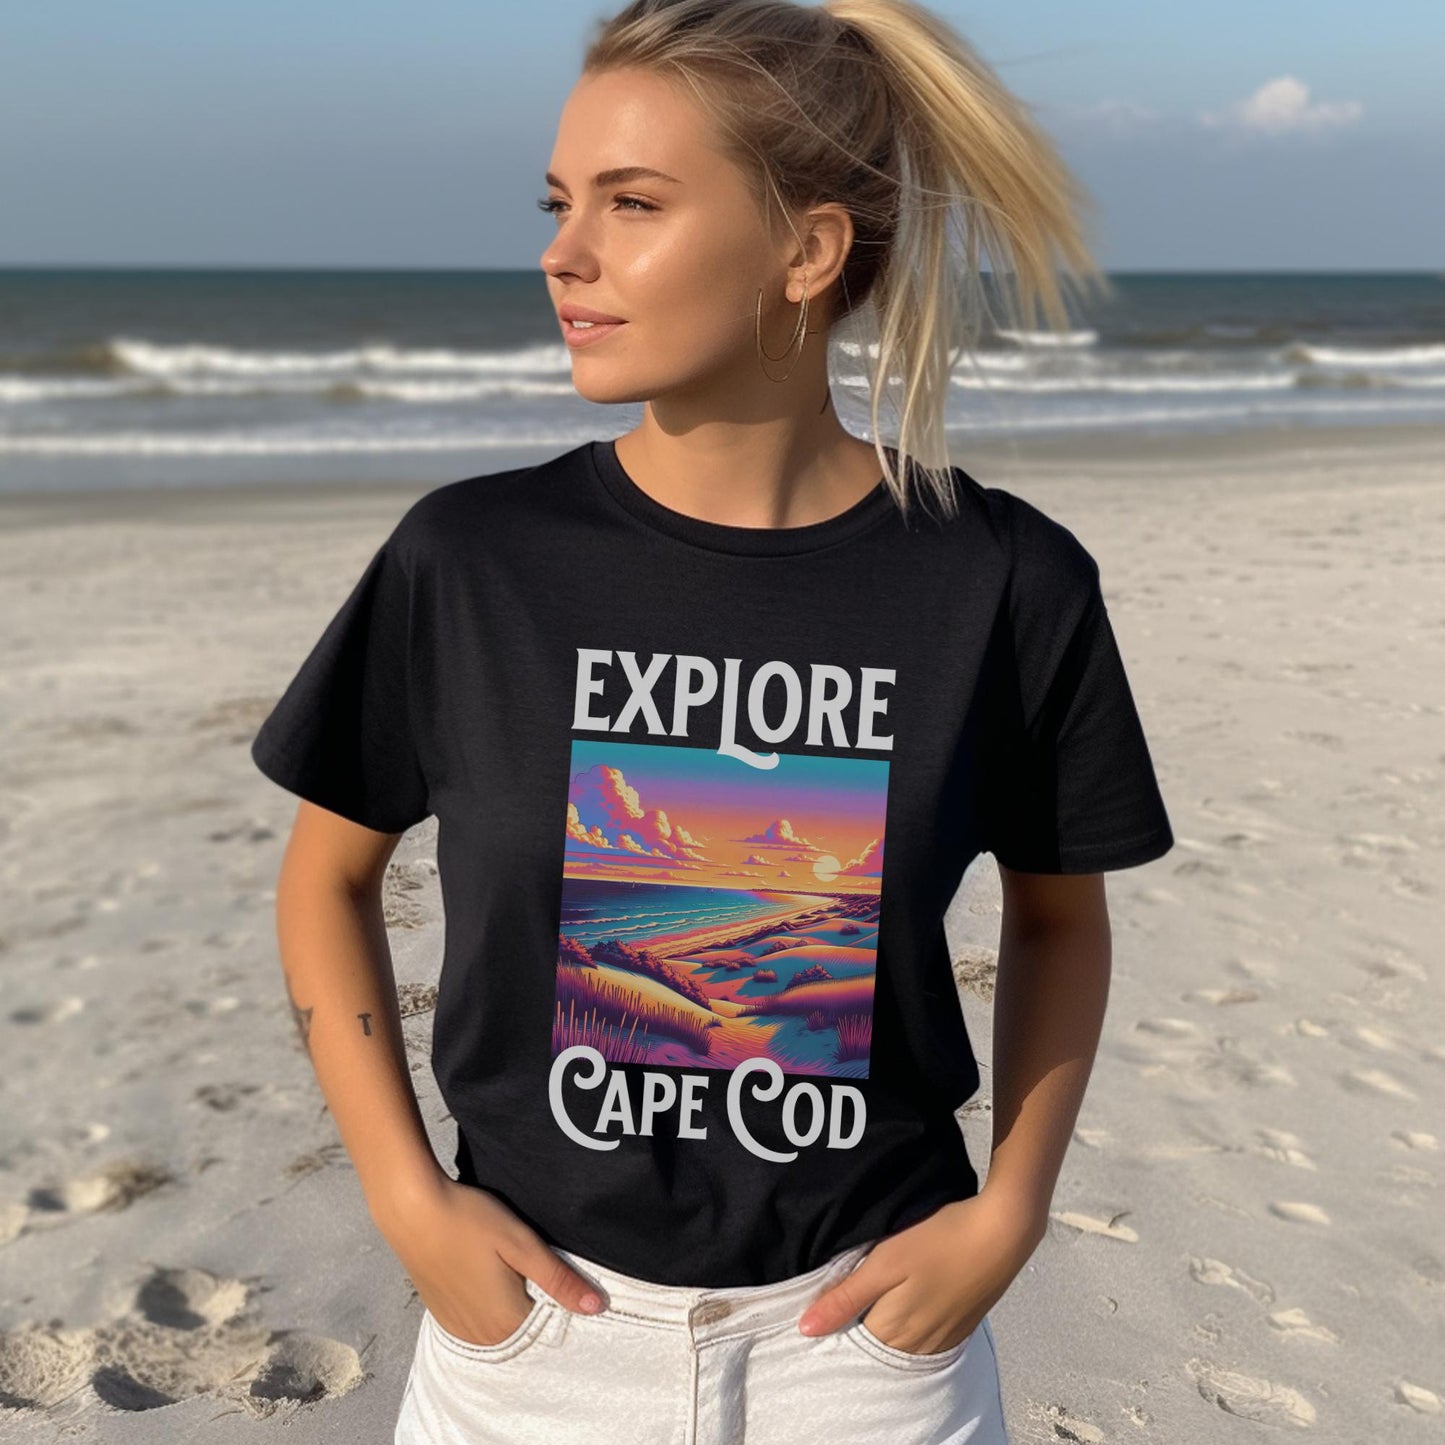 Live adventurously as you wear our Explore Cape Cod T-shirt!